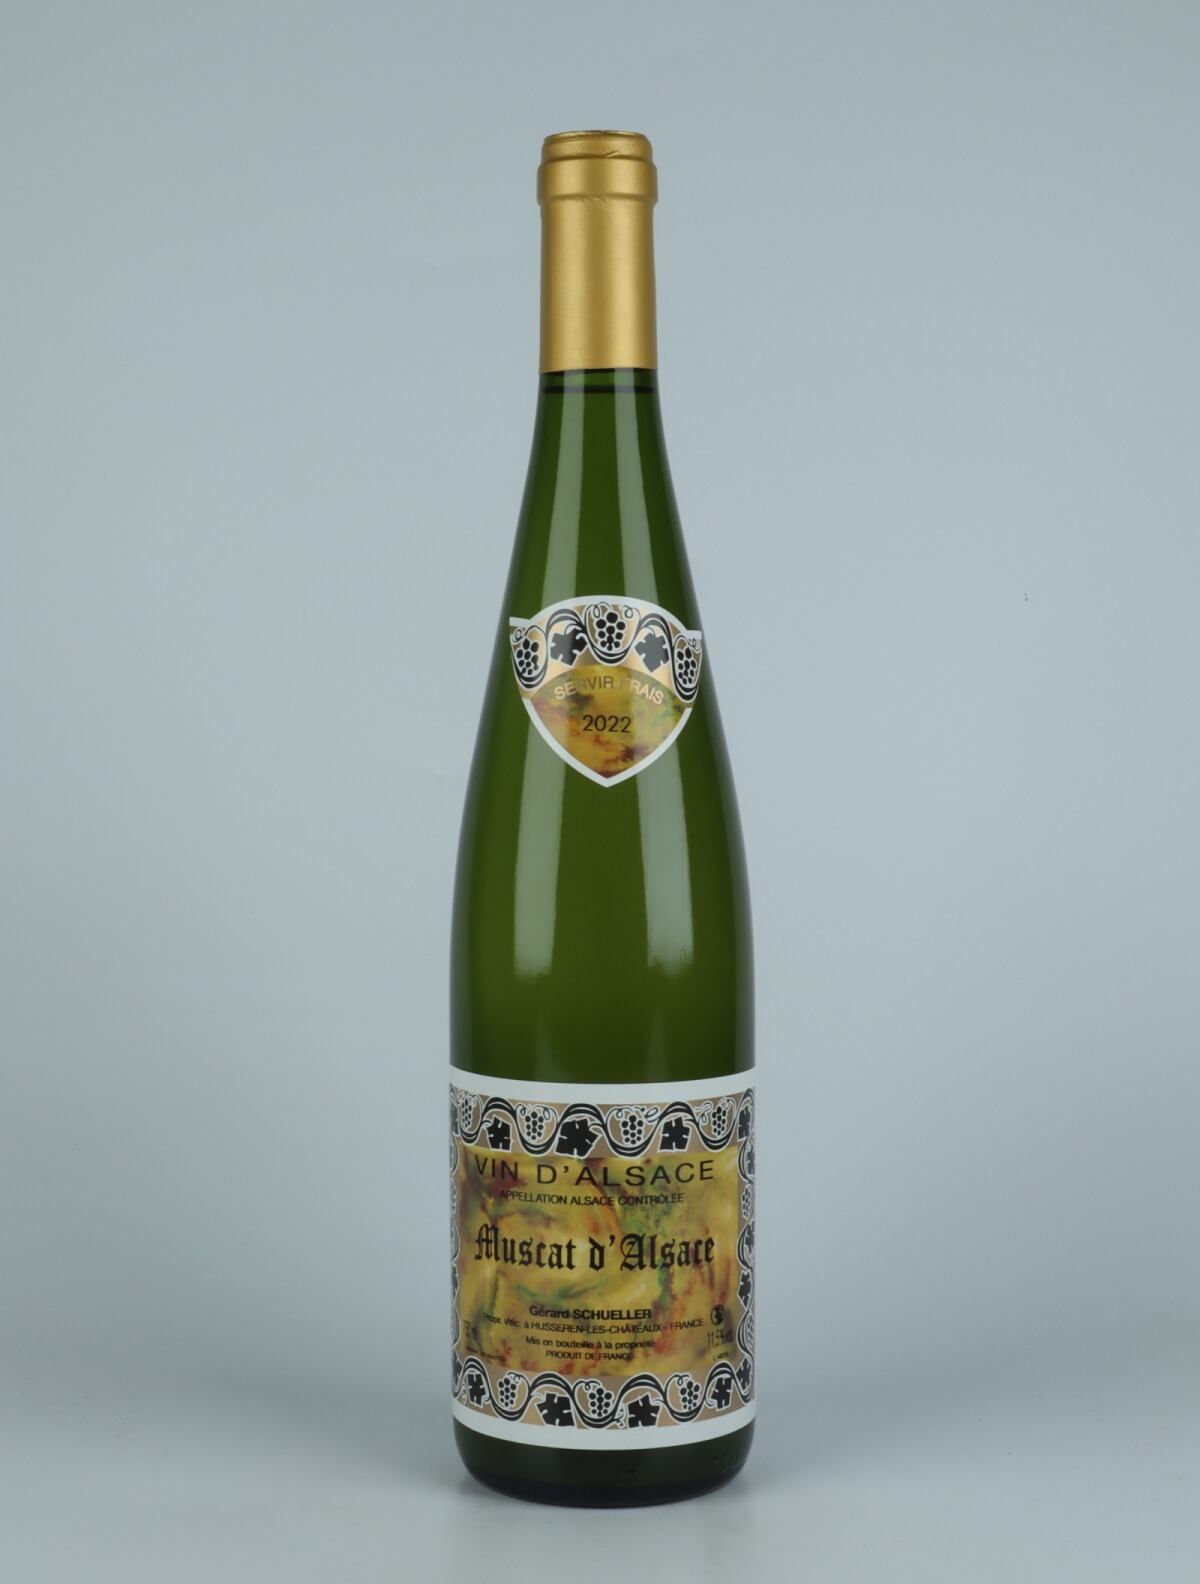 A bottle 2022 Muscat d'Alsace White wine from Gérard Schueller, Alsace in France